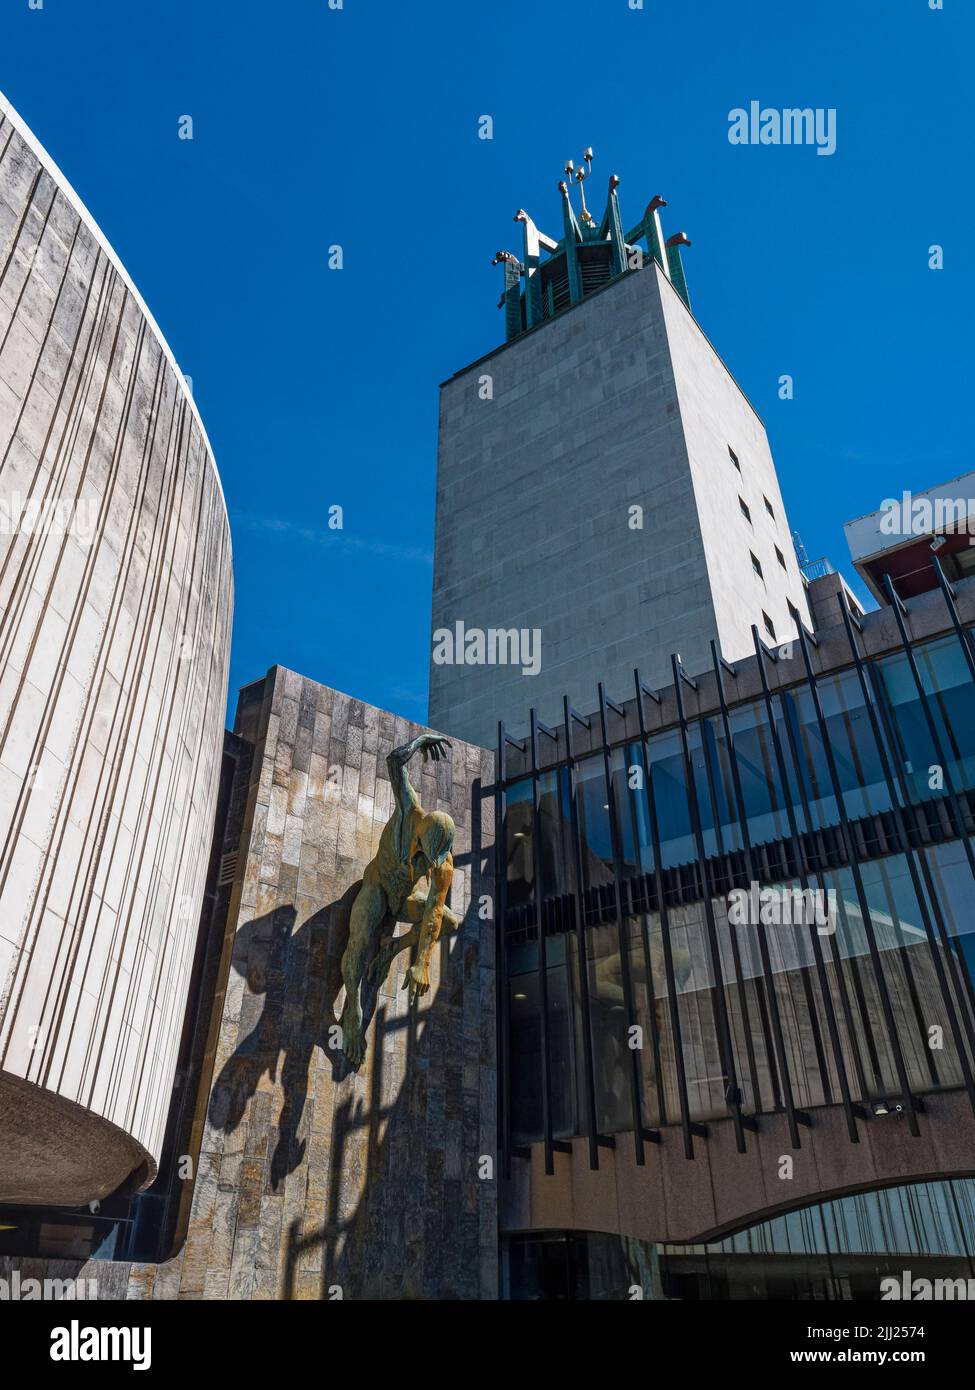 Civic Centre of Newcastle upon Tyne, Uk designed by architect George Kenyon, with bronze casting of River God Tyne, UK Stock Photo